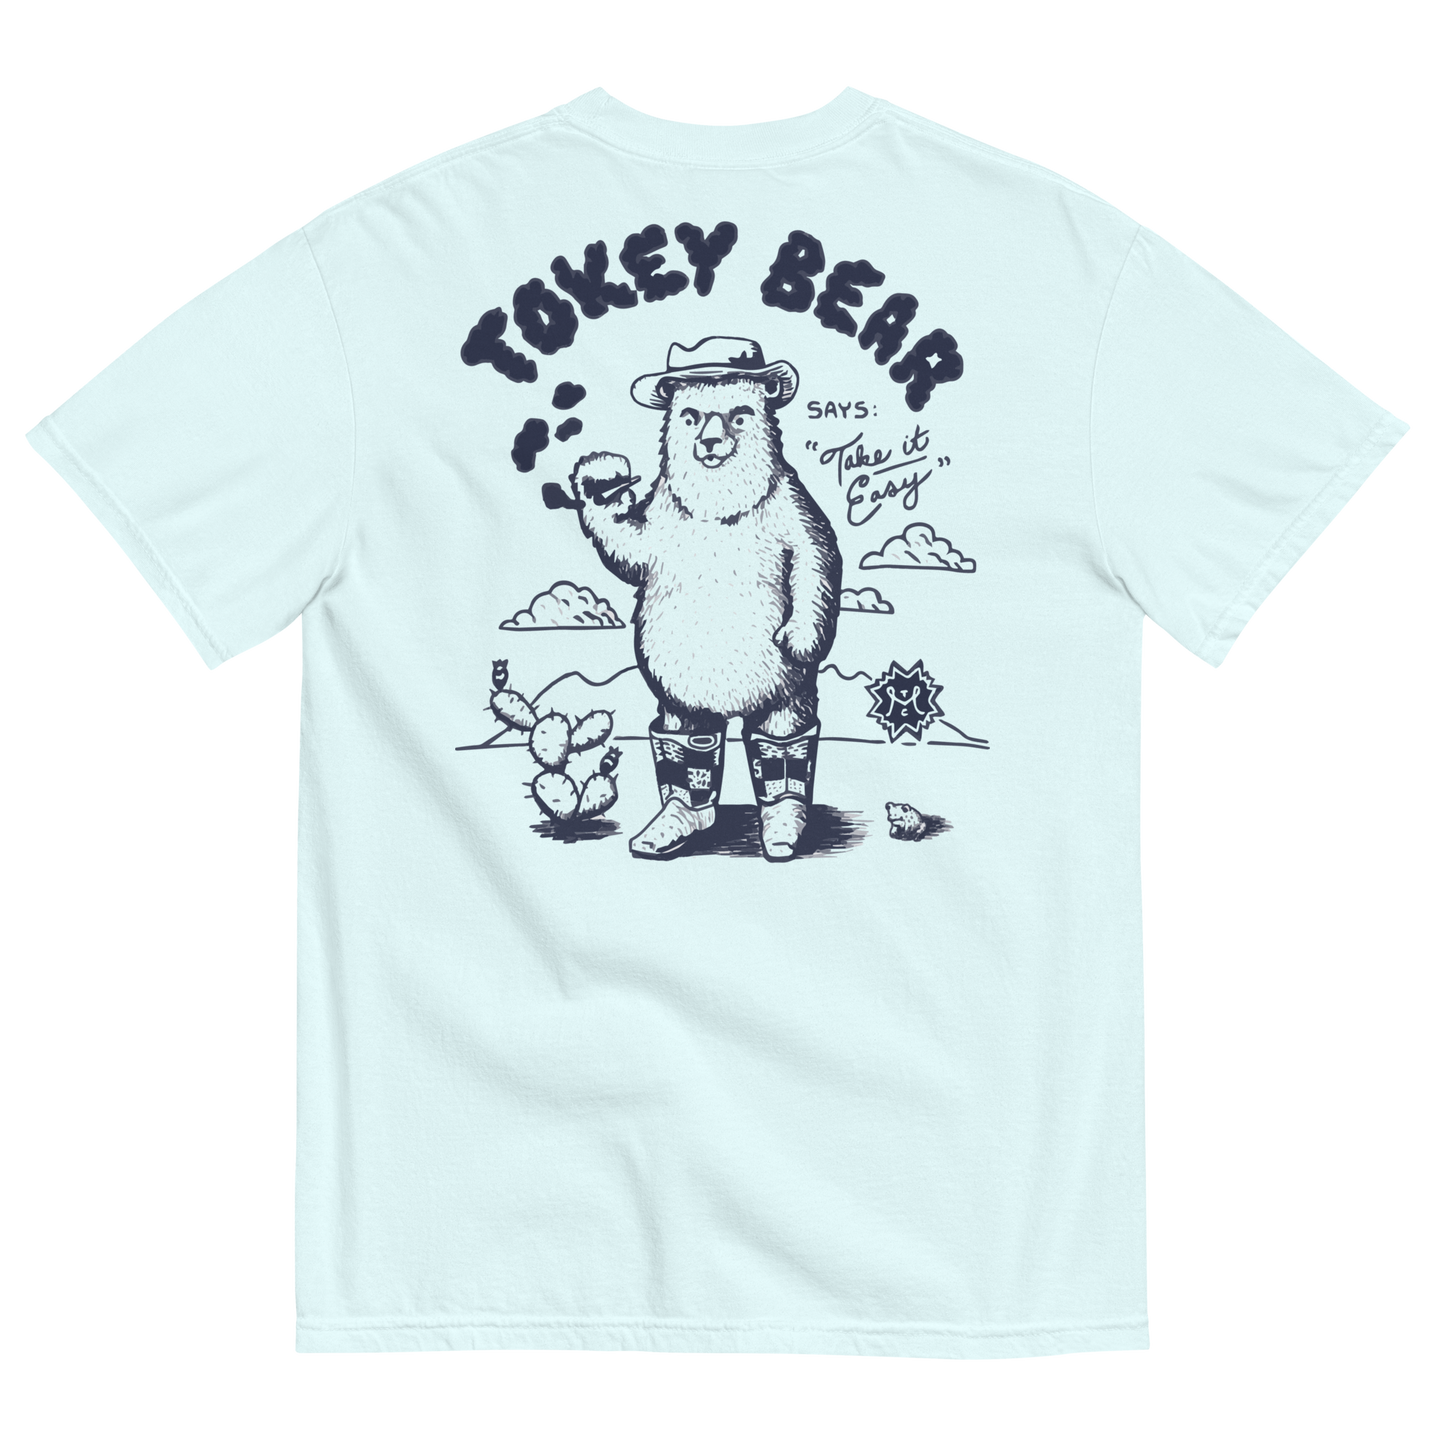 Tokey Bear